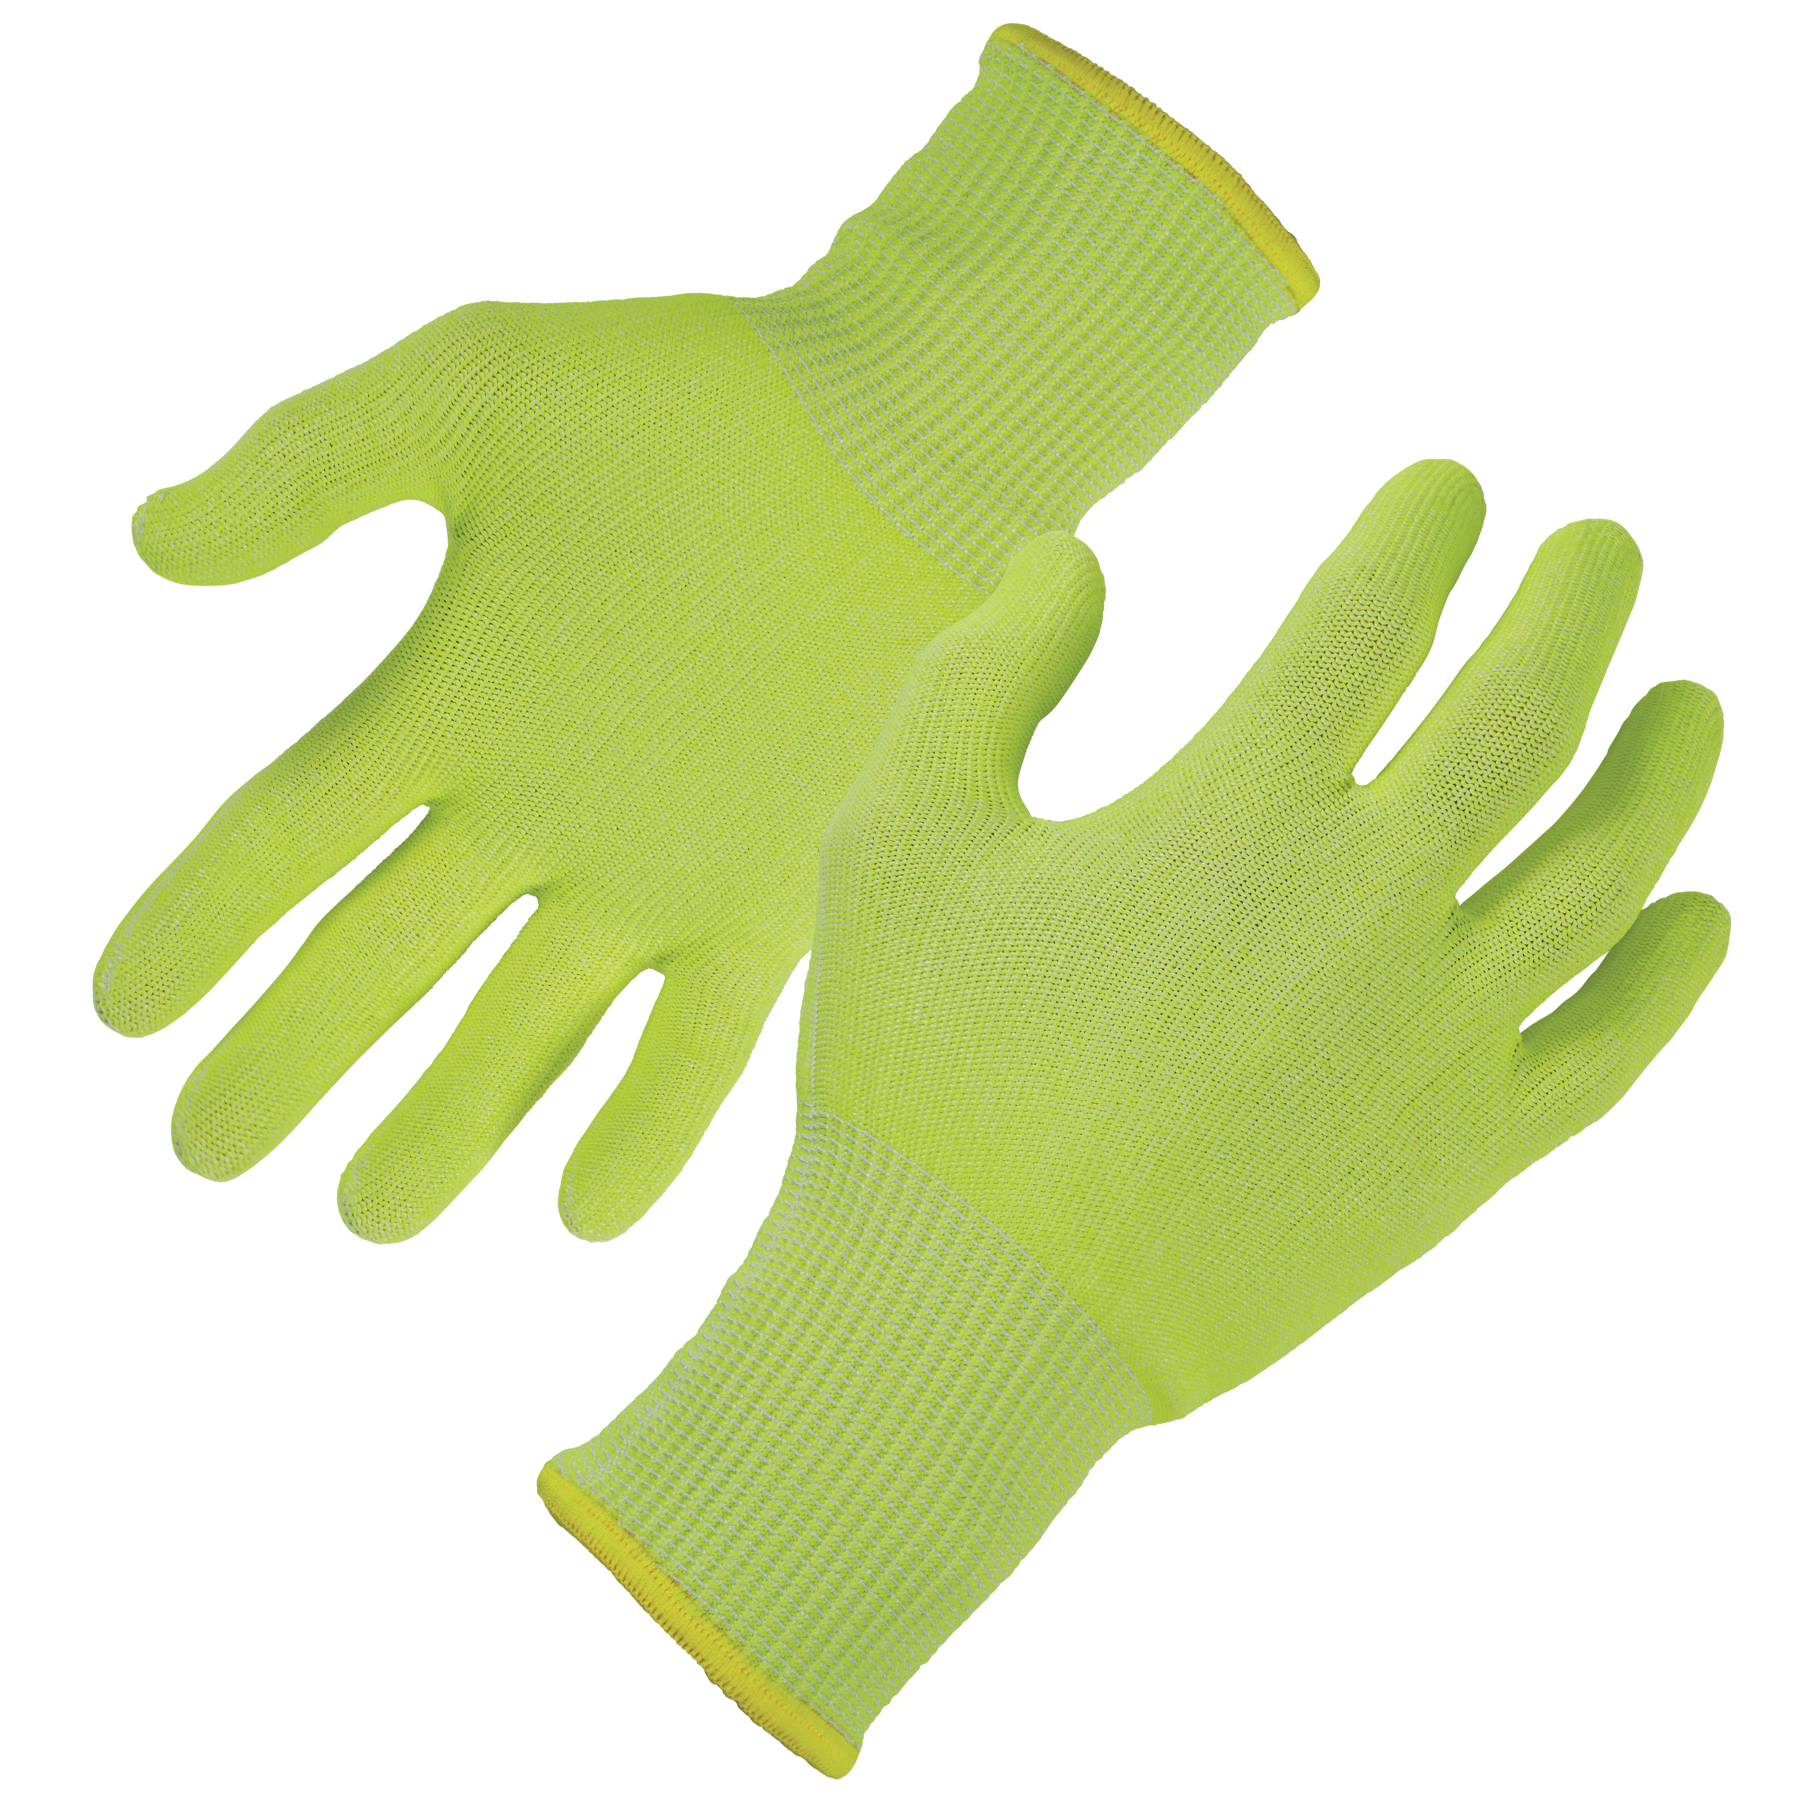 https://www.ergodyne.com/sites/default/files/product-images/18012-7040-cut-resistant-food-grade-gloves-pair_1.jpg